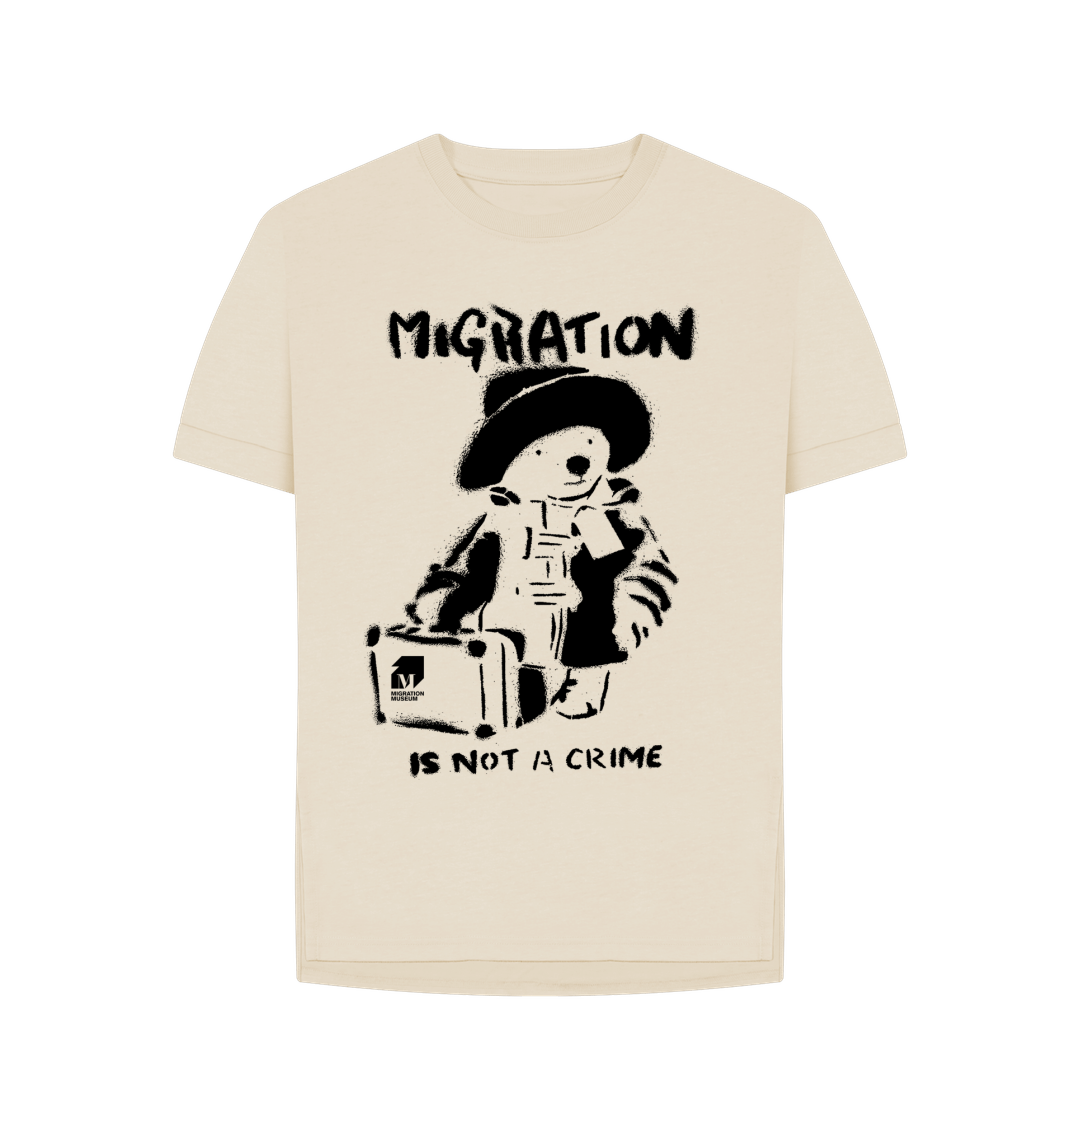 Migration Is Not A Crime - Organic Cotton Women's Relaxed Fit T-shirt. - Migration Museum Shop